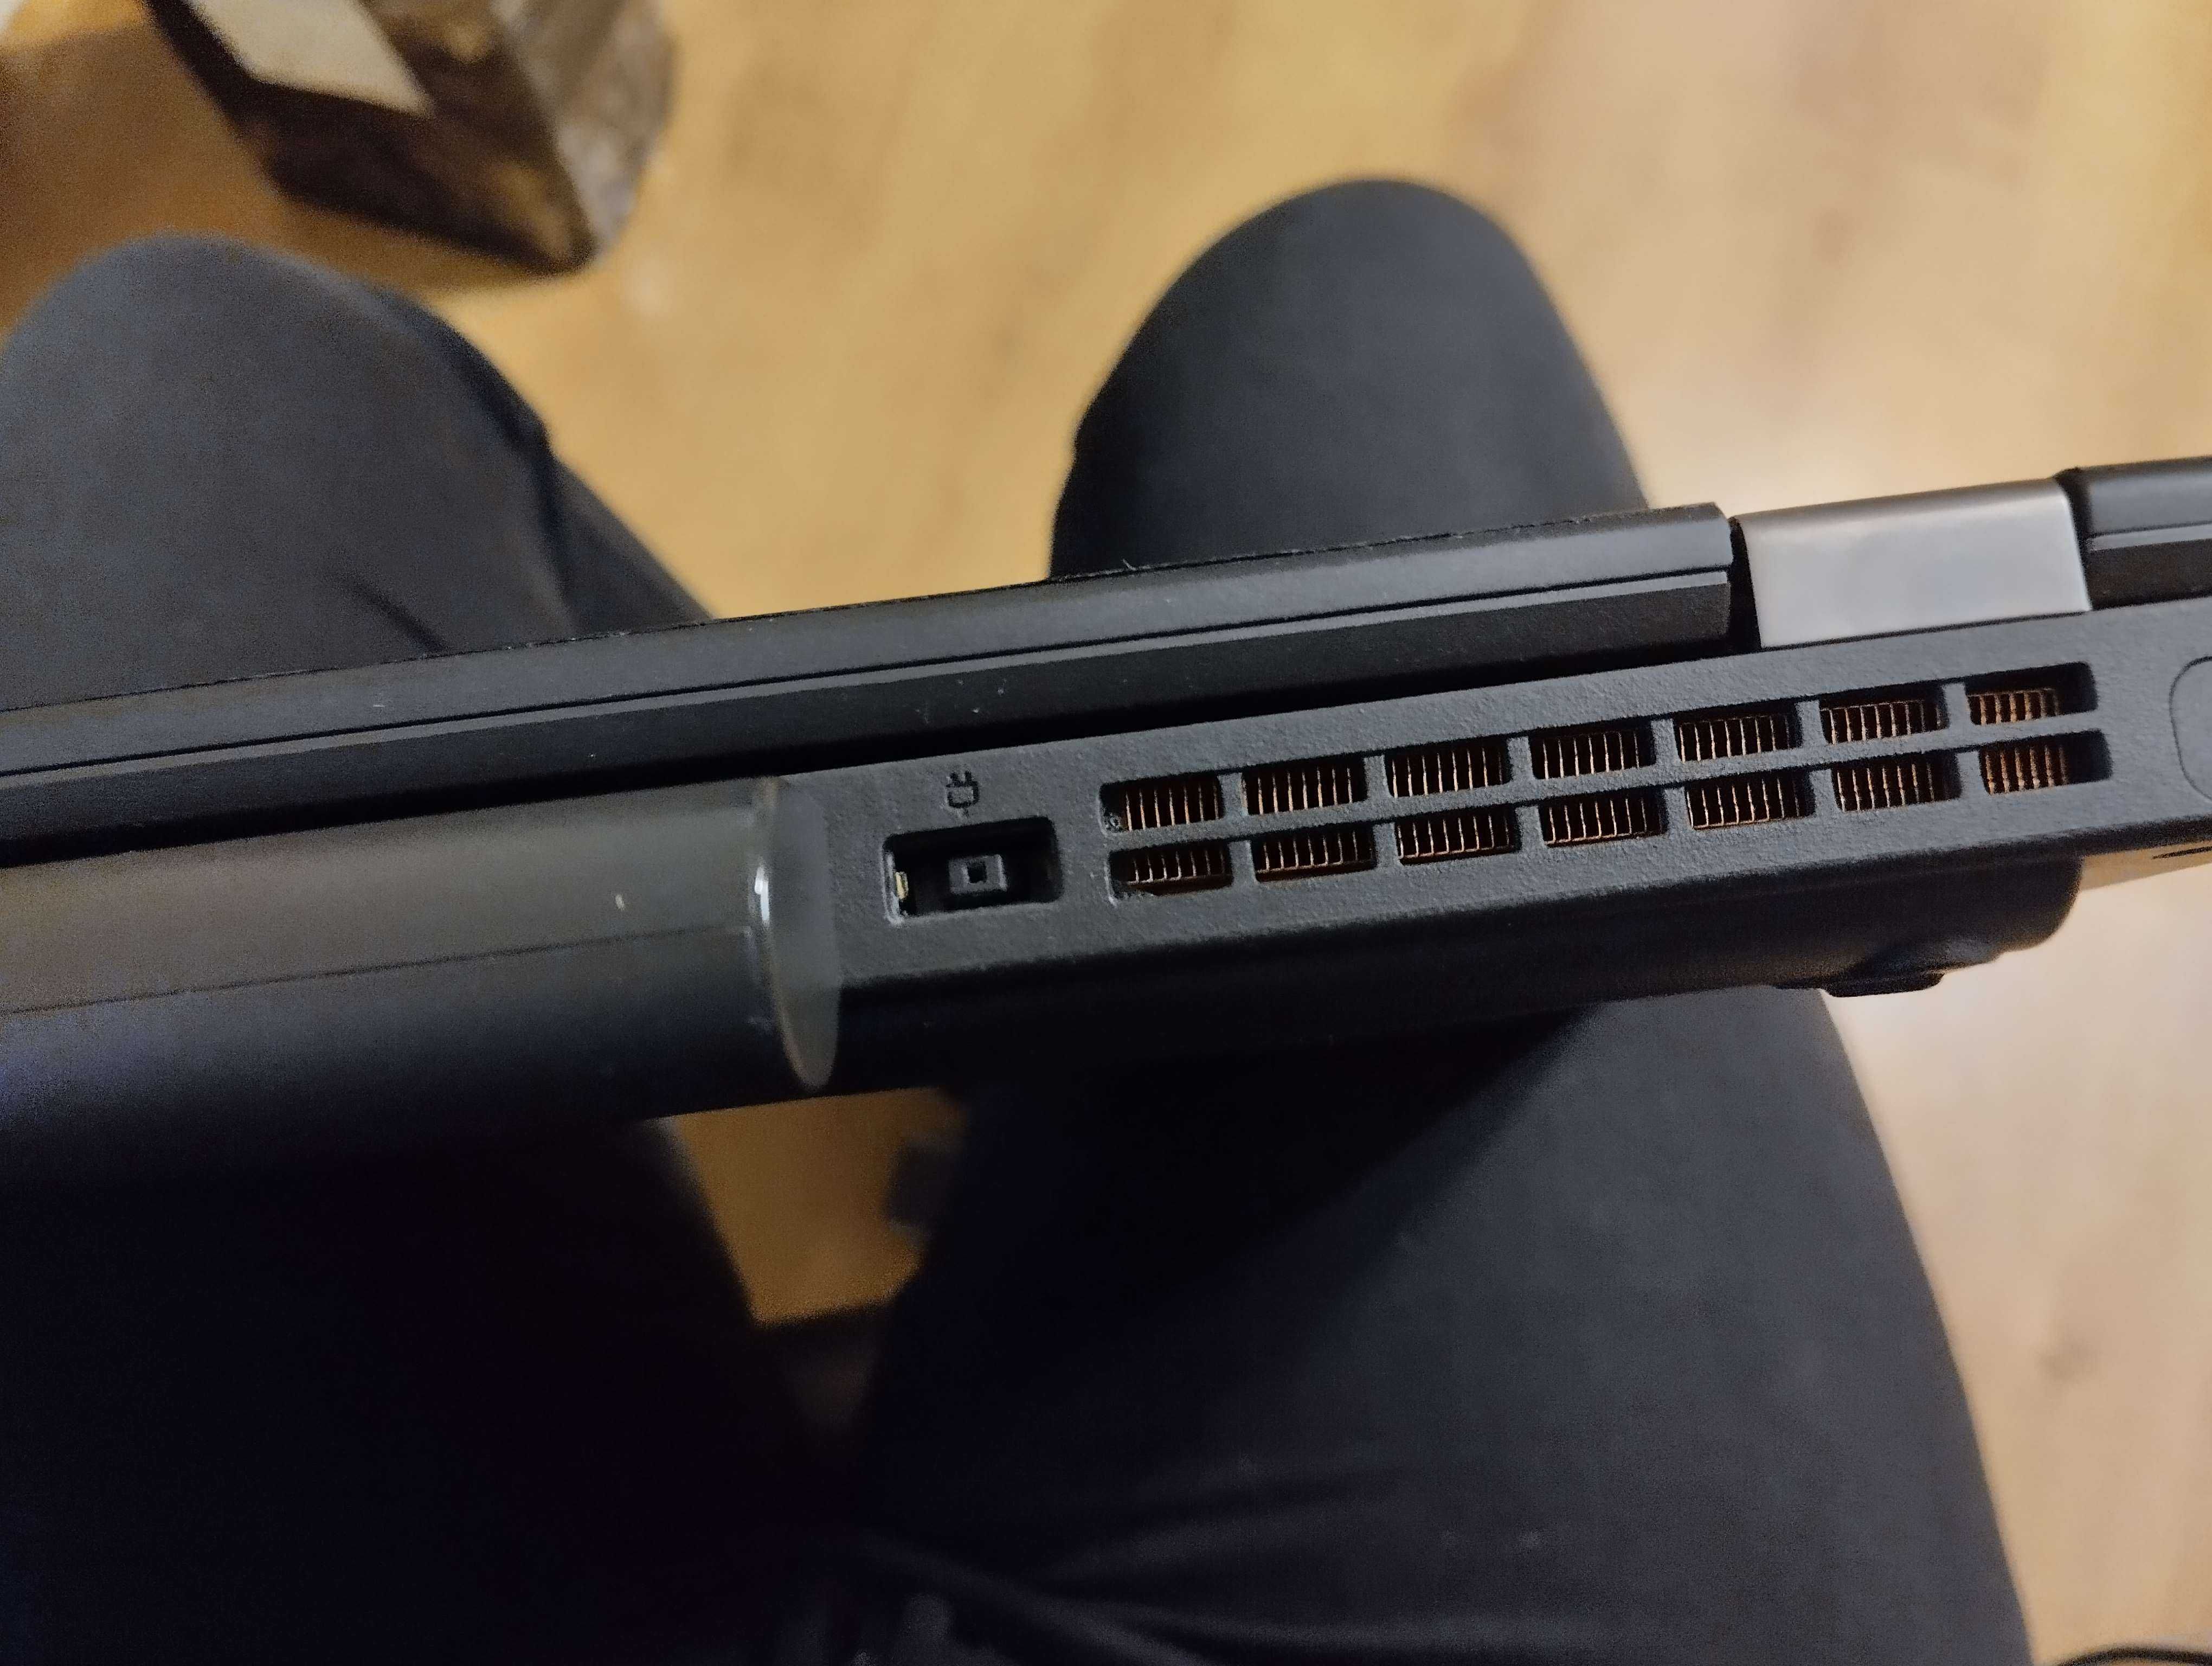 15,6"FHD Laptop Lenovo ThinkPad W540 i7-4810MQ/16GB/256GB_SSD+500GB HD